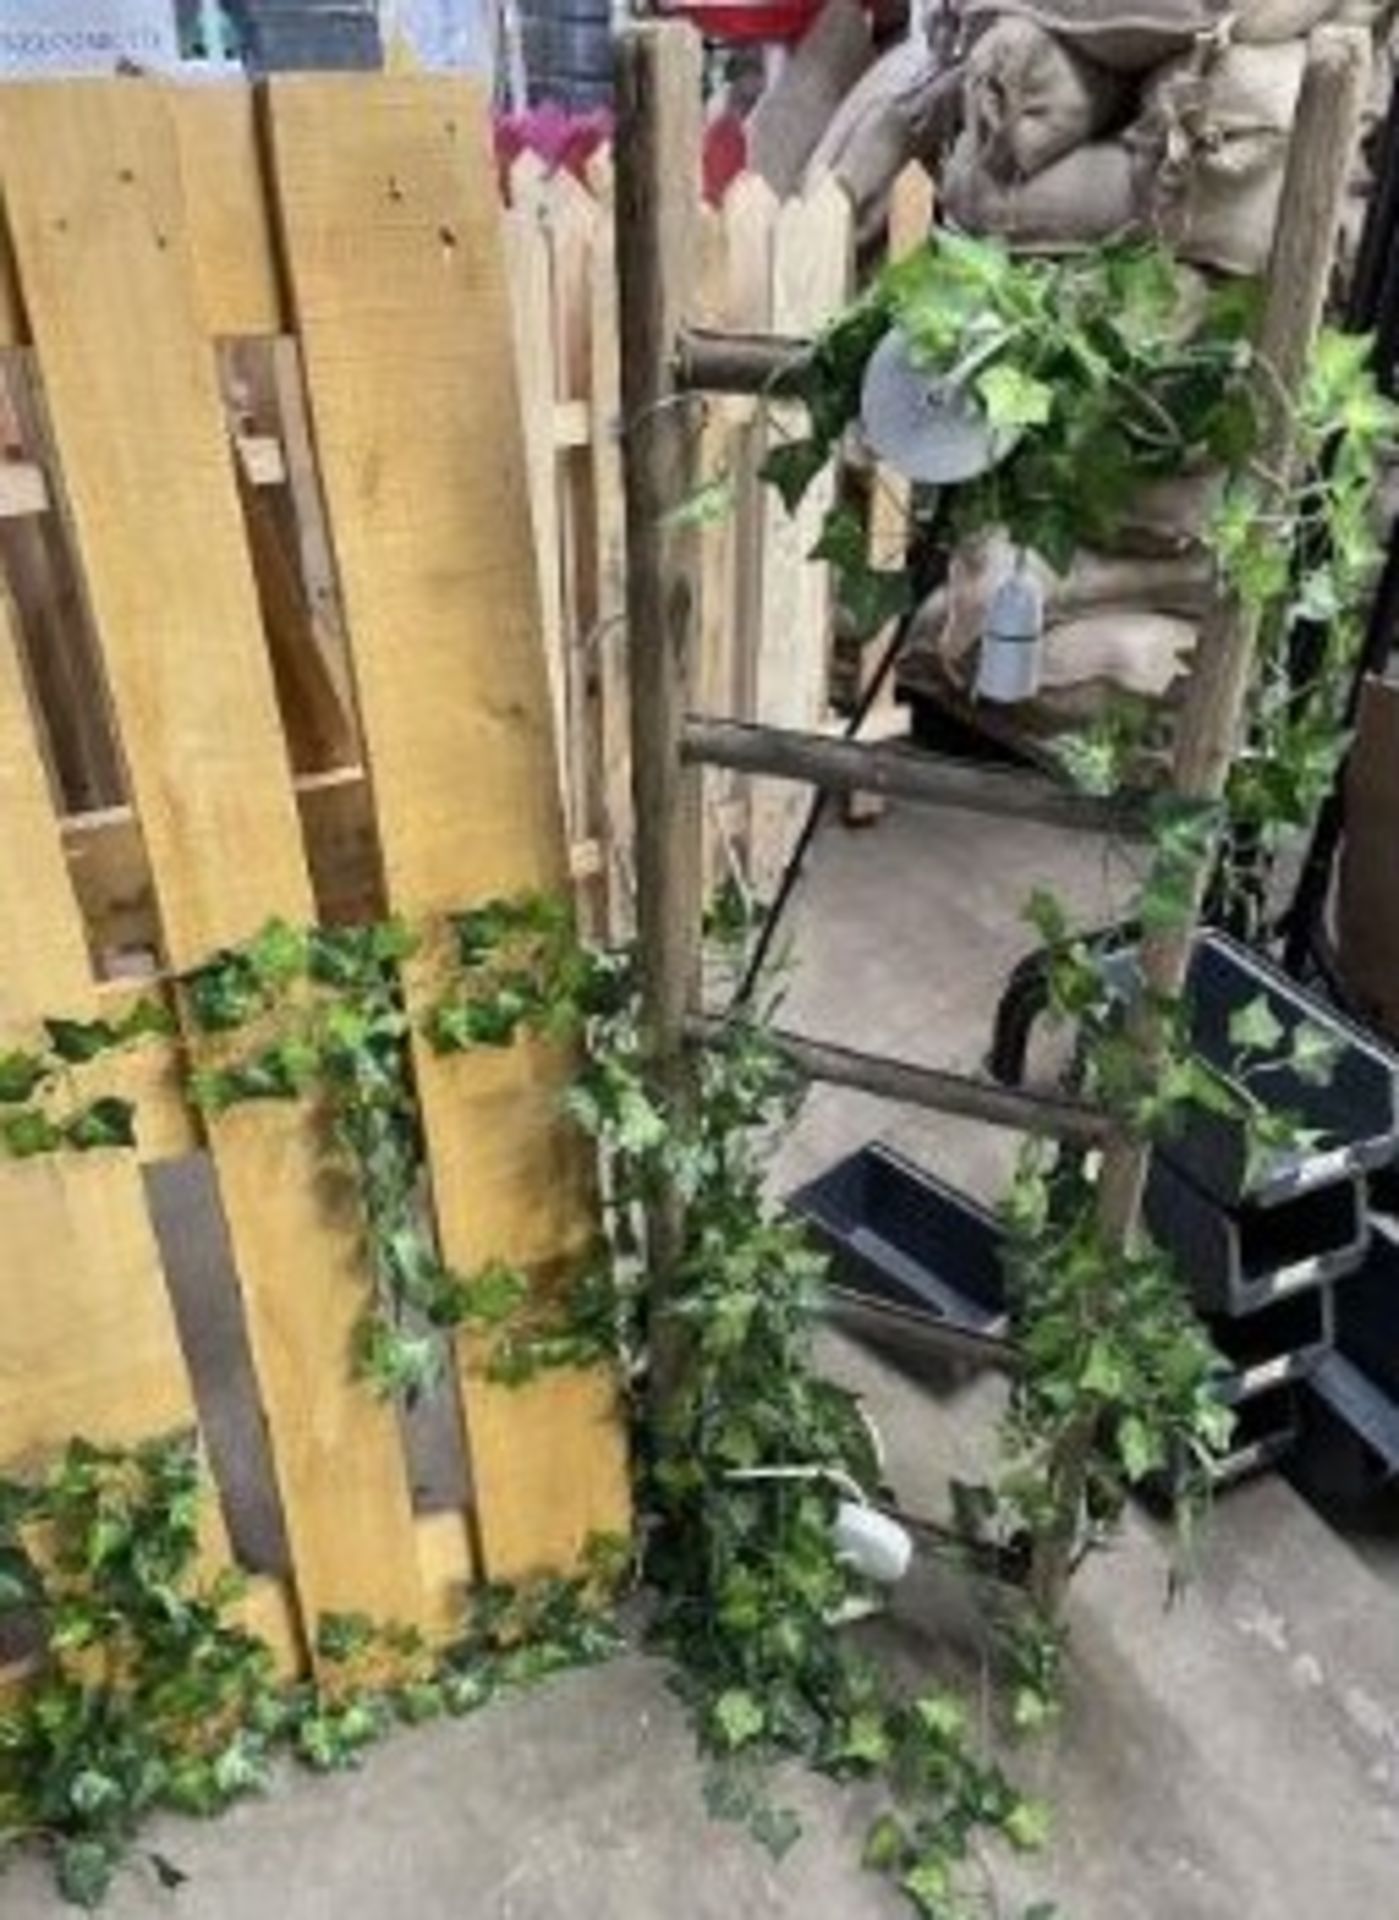 A-Frame Pallet & Ladder Lighting Prop Dressed in Faux Ivy - Image 2 of 4